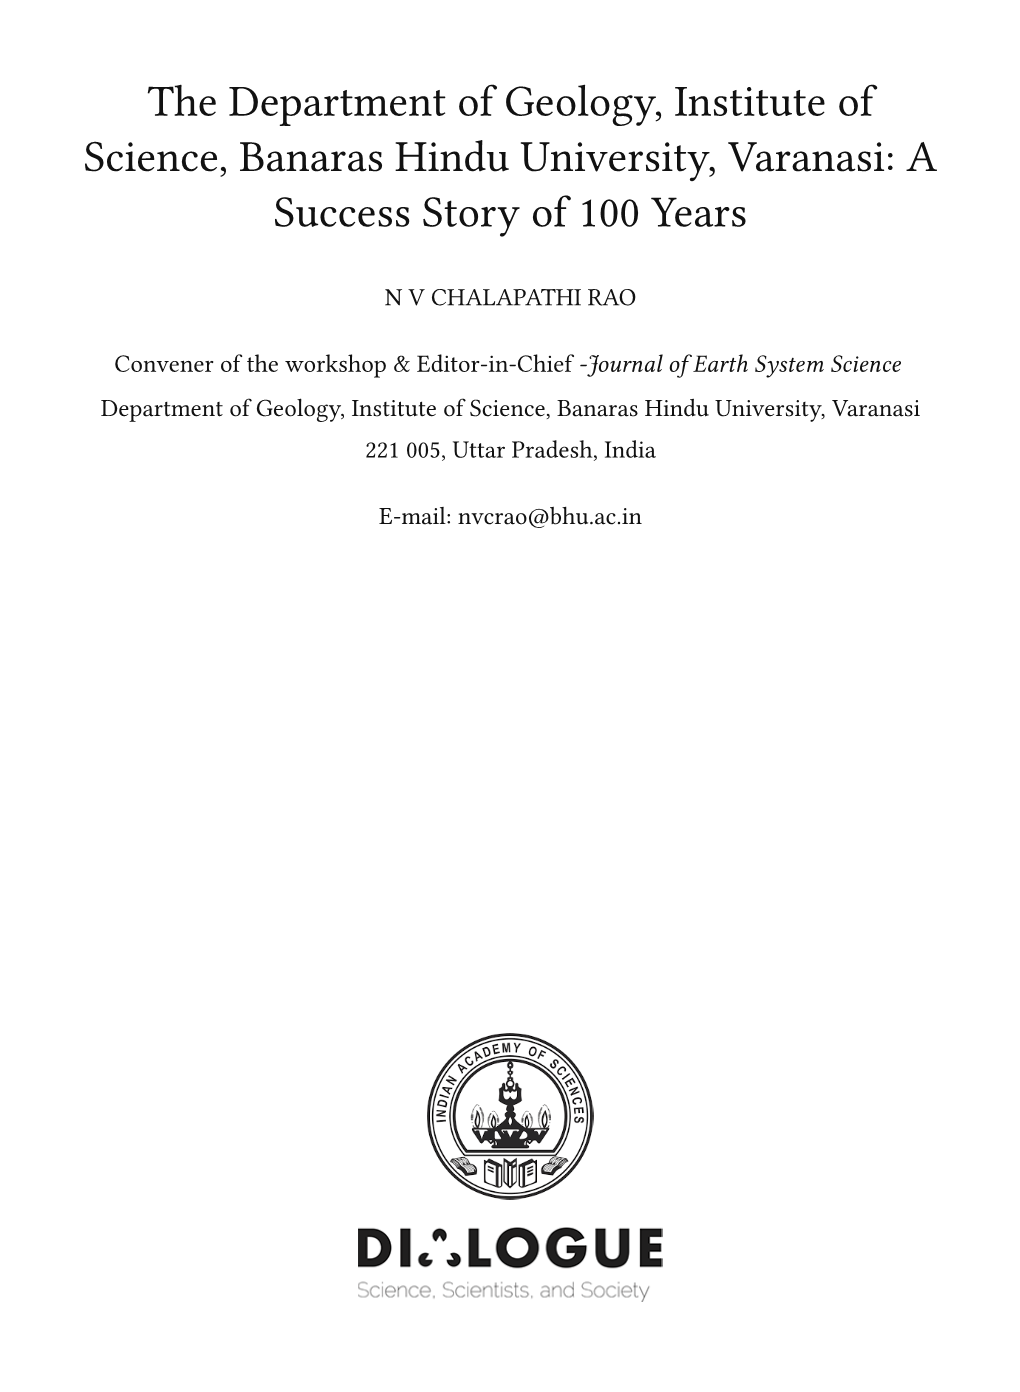 The Department of Geology, Institute of Science, Banaras Hindu University, Varanasi: a Success Story of 100 Years